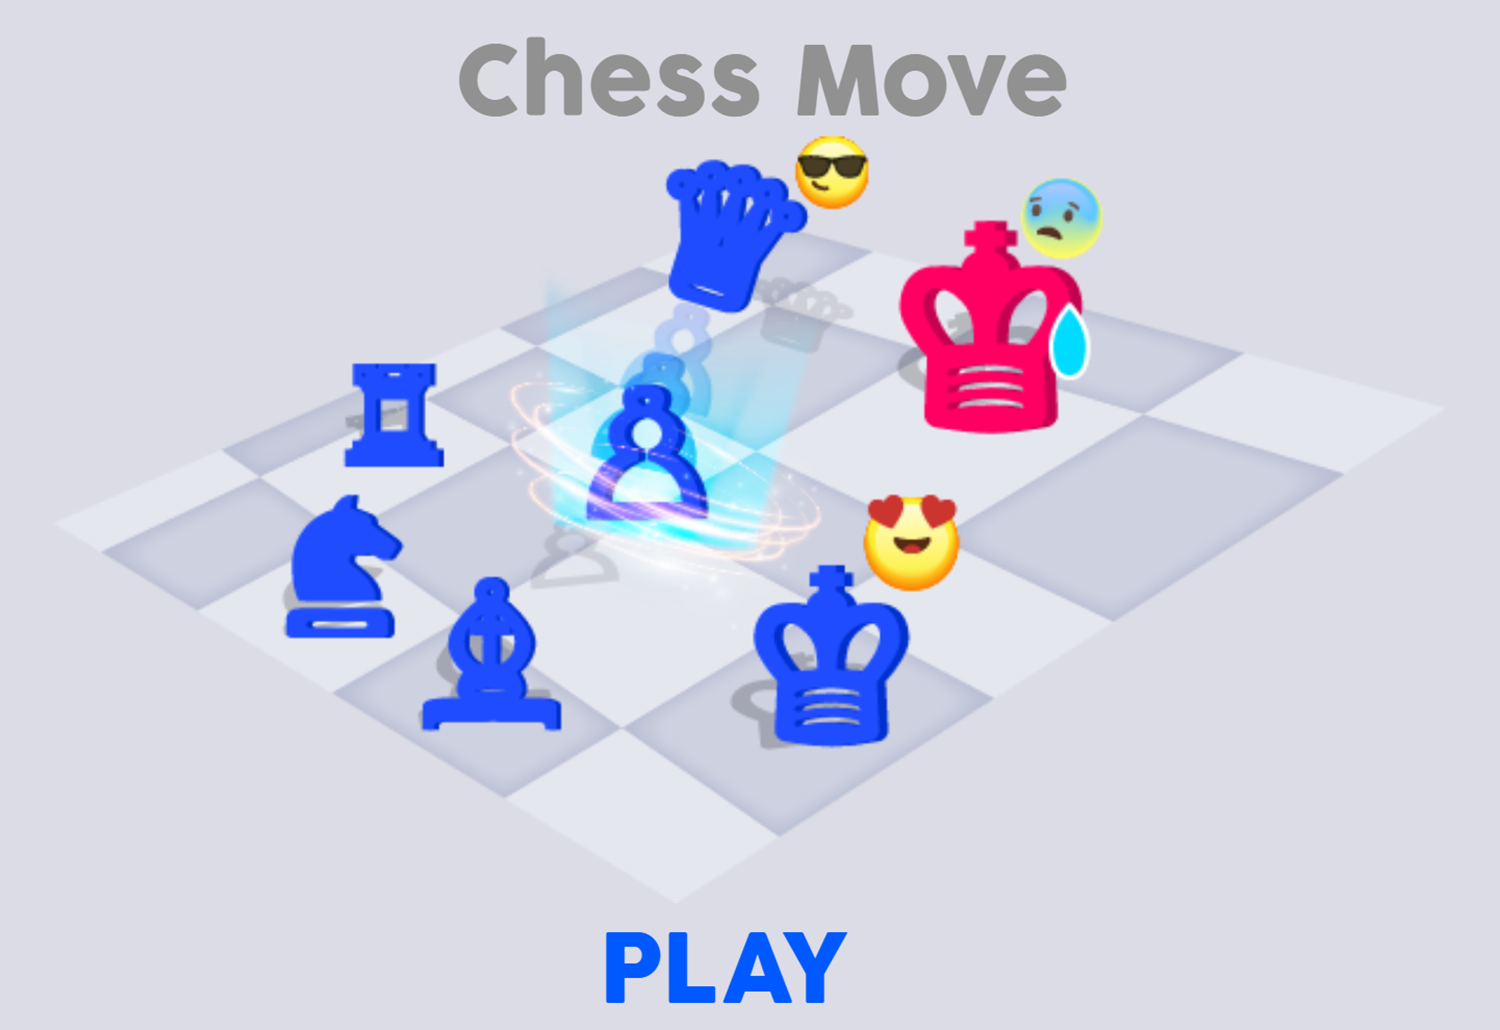 Chess Move Welcome Screen Screenshot.